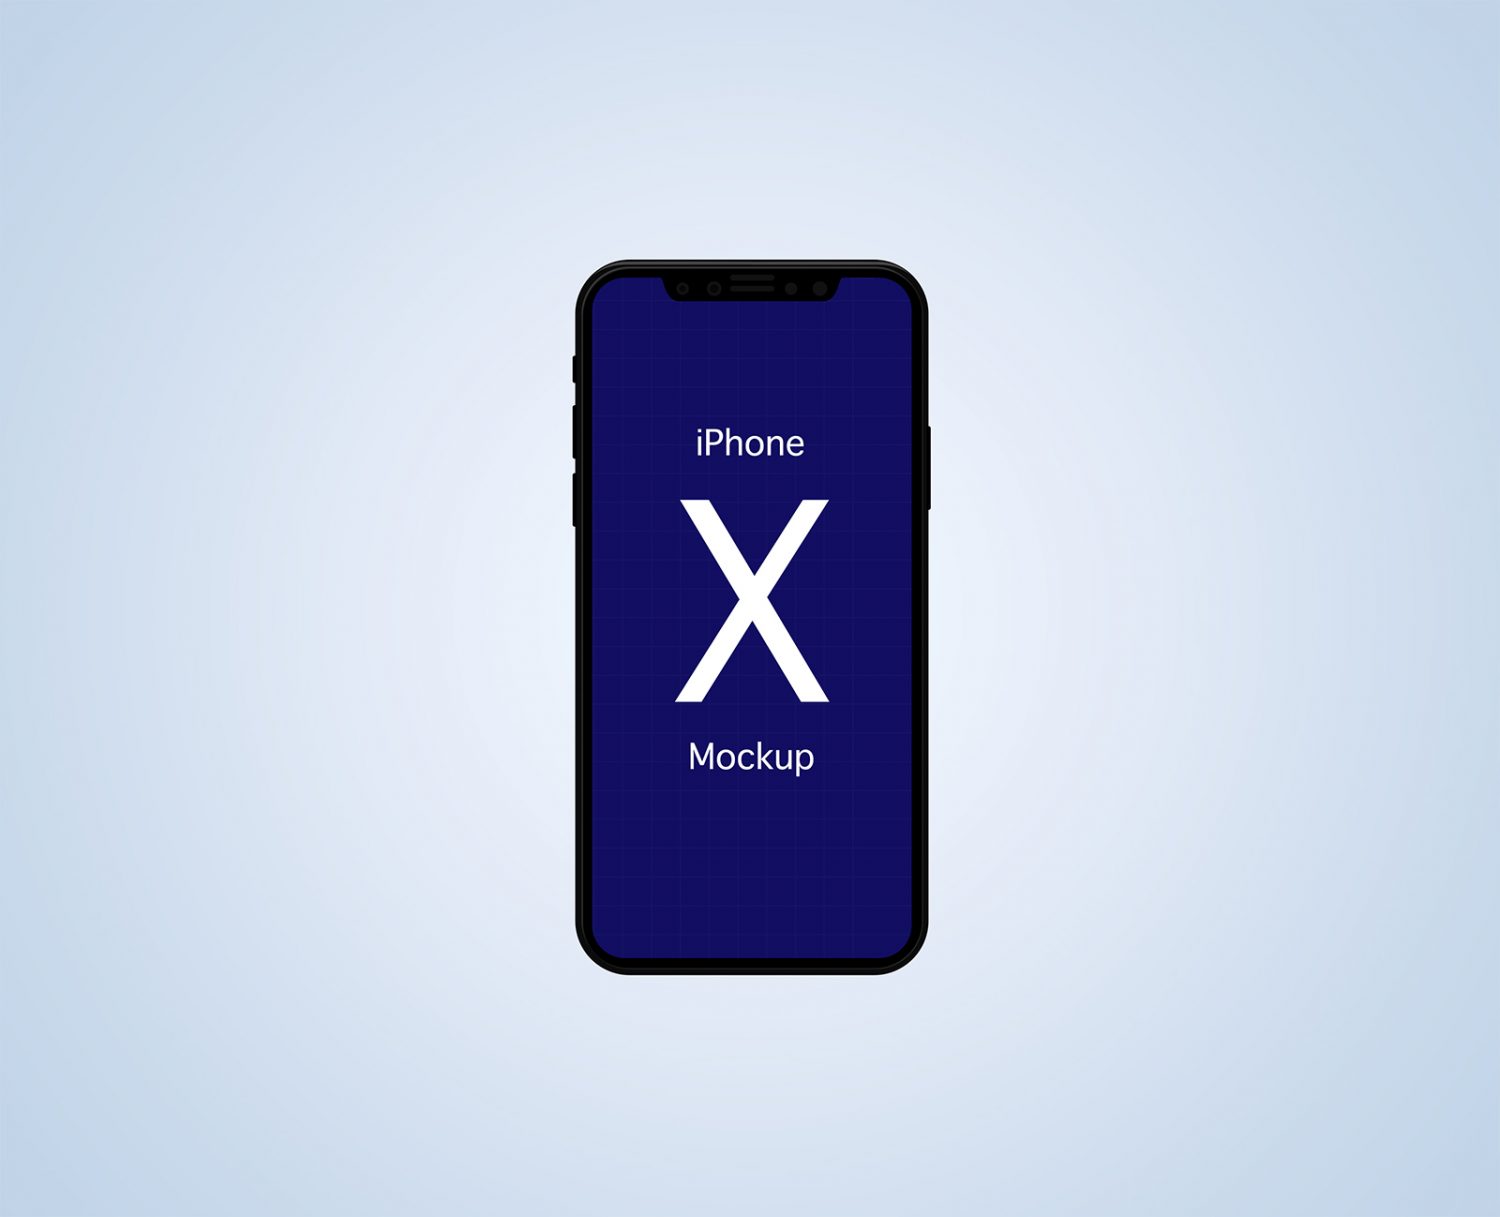 iPhone X Mockup & iOS 11 GUI